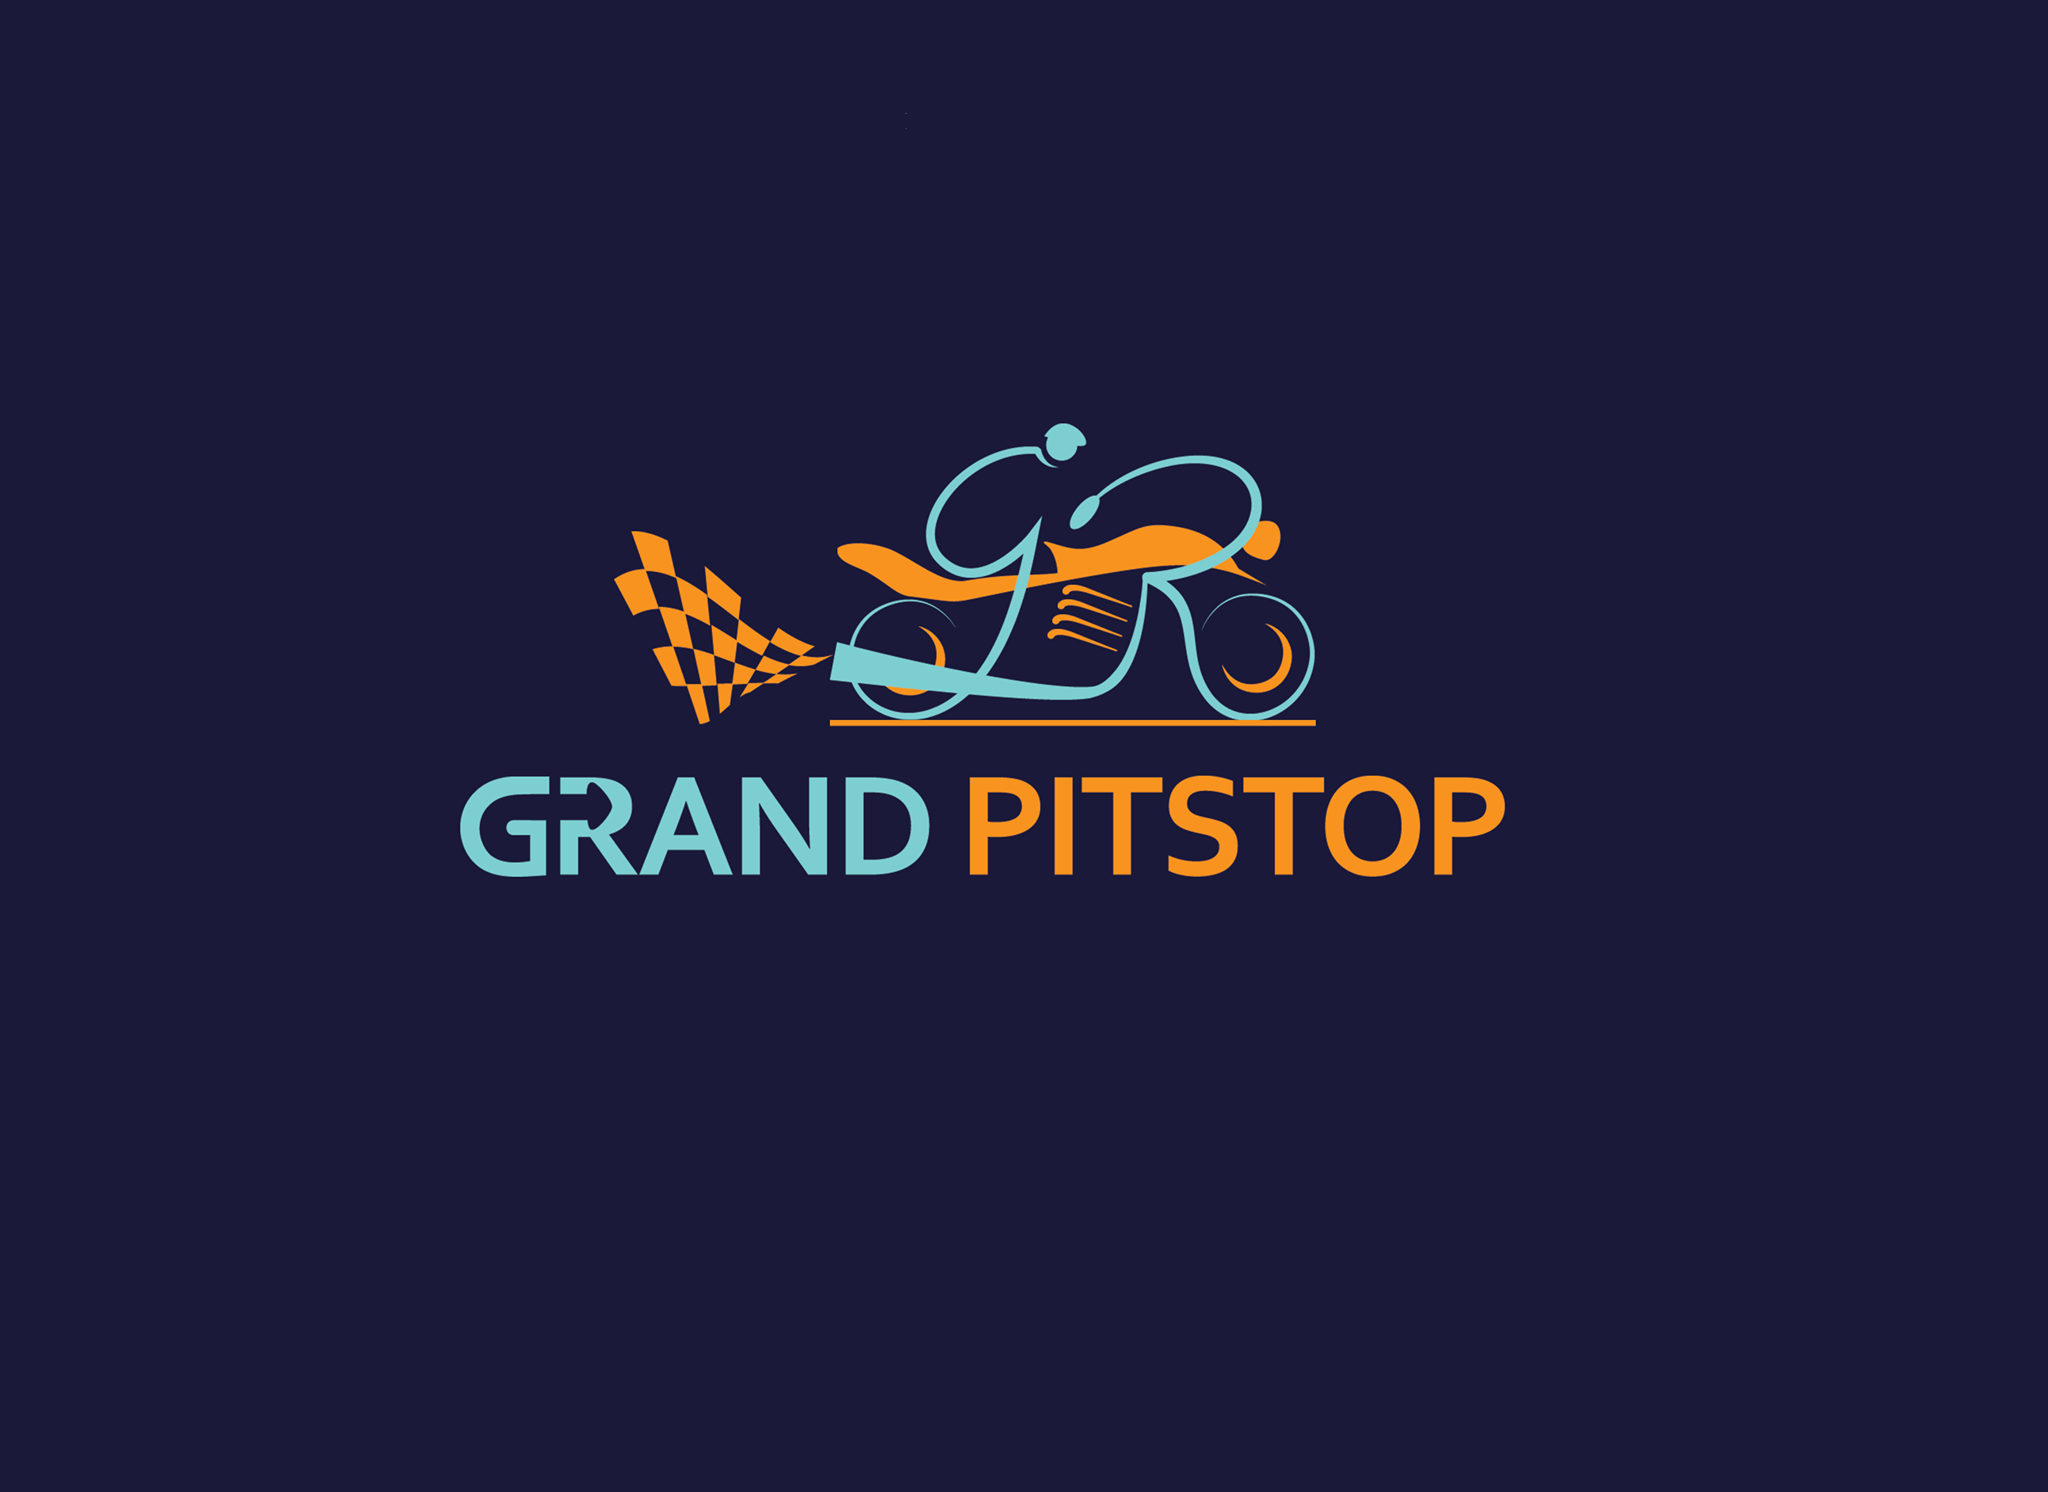 Grand Pitstop